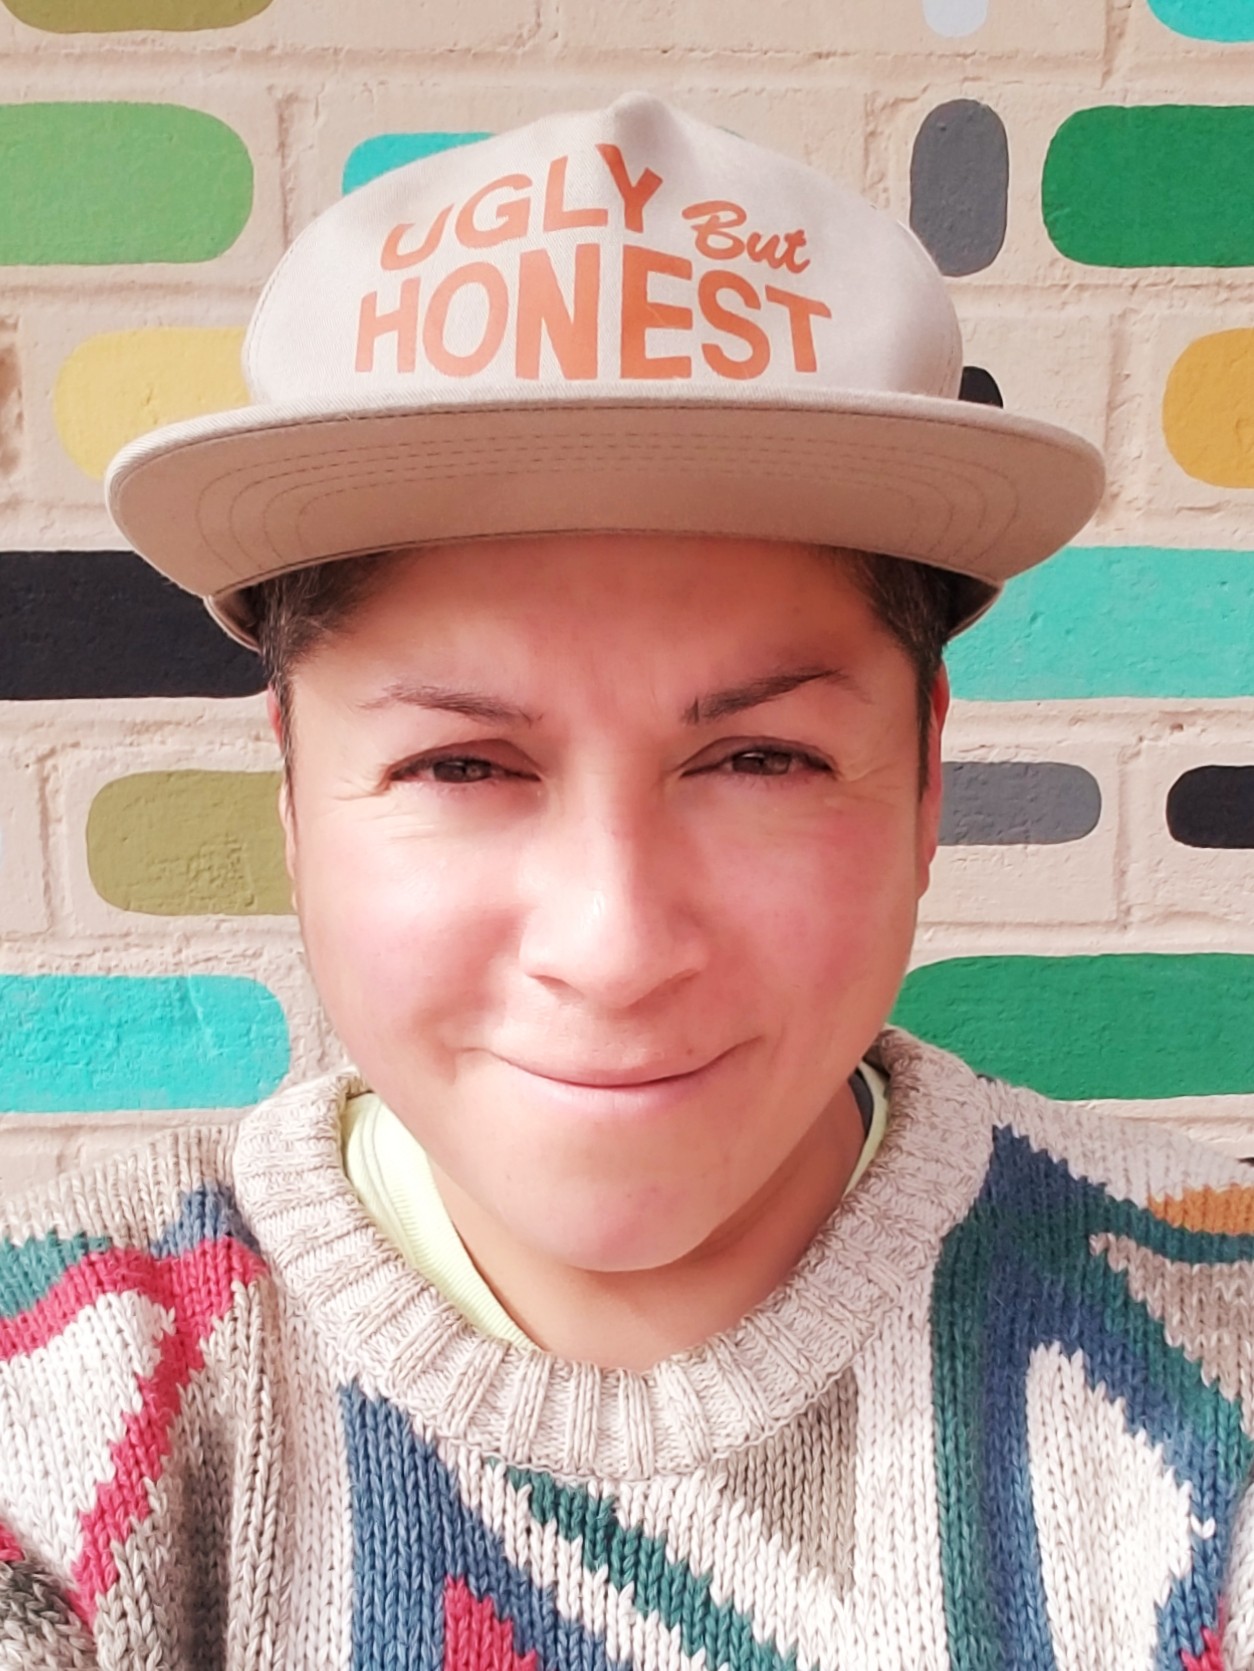 Raquel Gutiérrez is smiling, facing the camera, wearing a baseball cap that reads "Ugly But Honest."